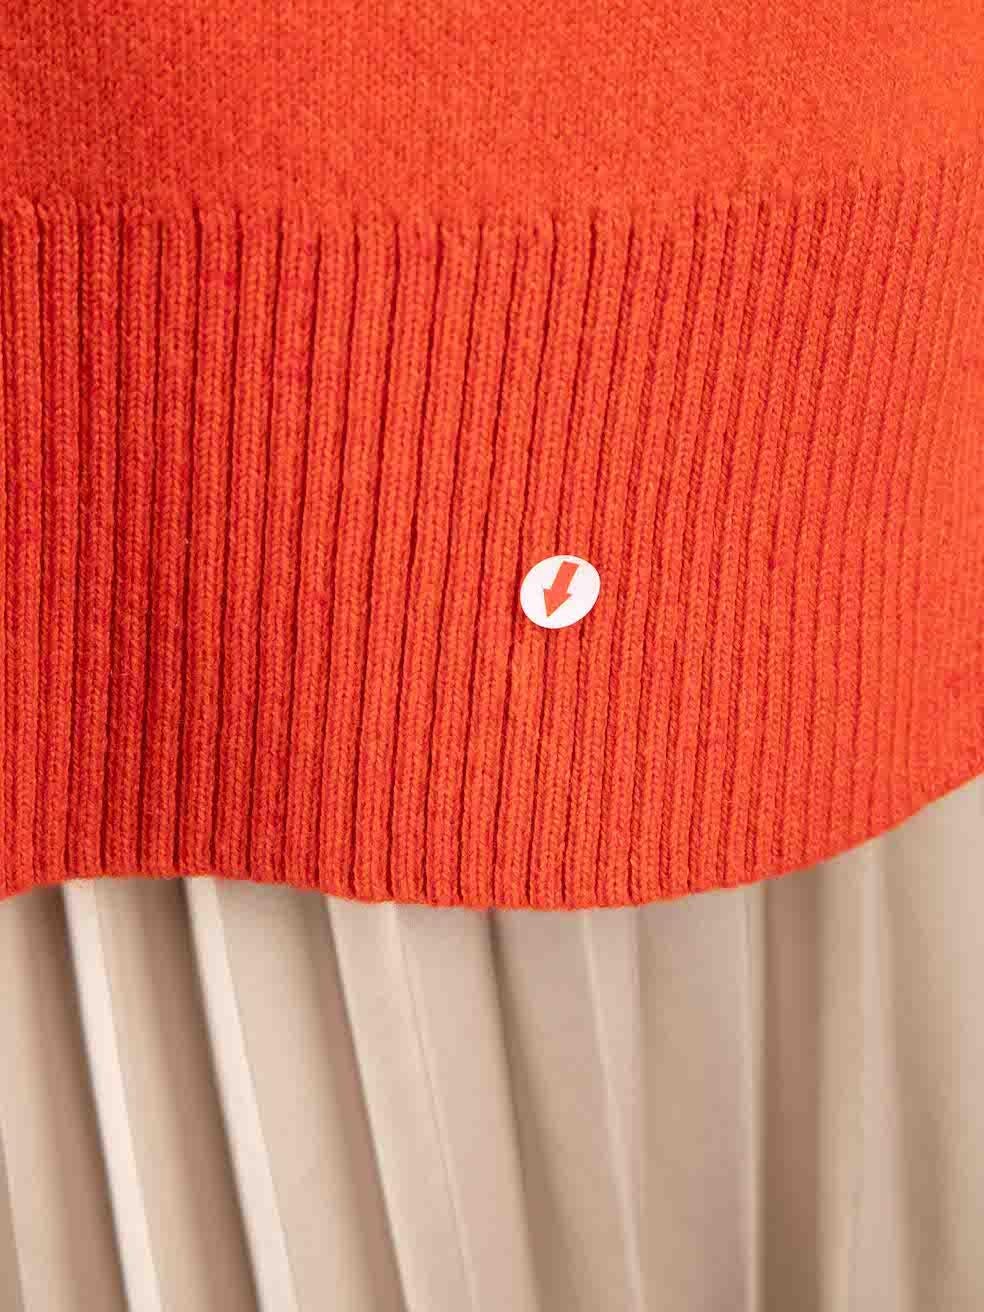 Proenza Schouler Orange Wool V-Neck Knit Sweater Size XS For Sale 1